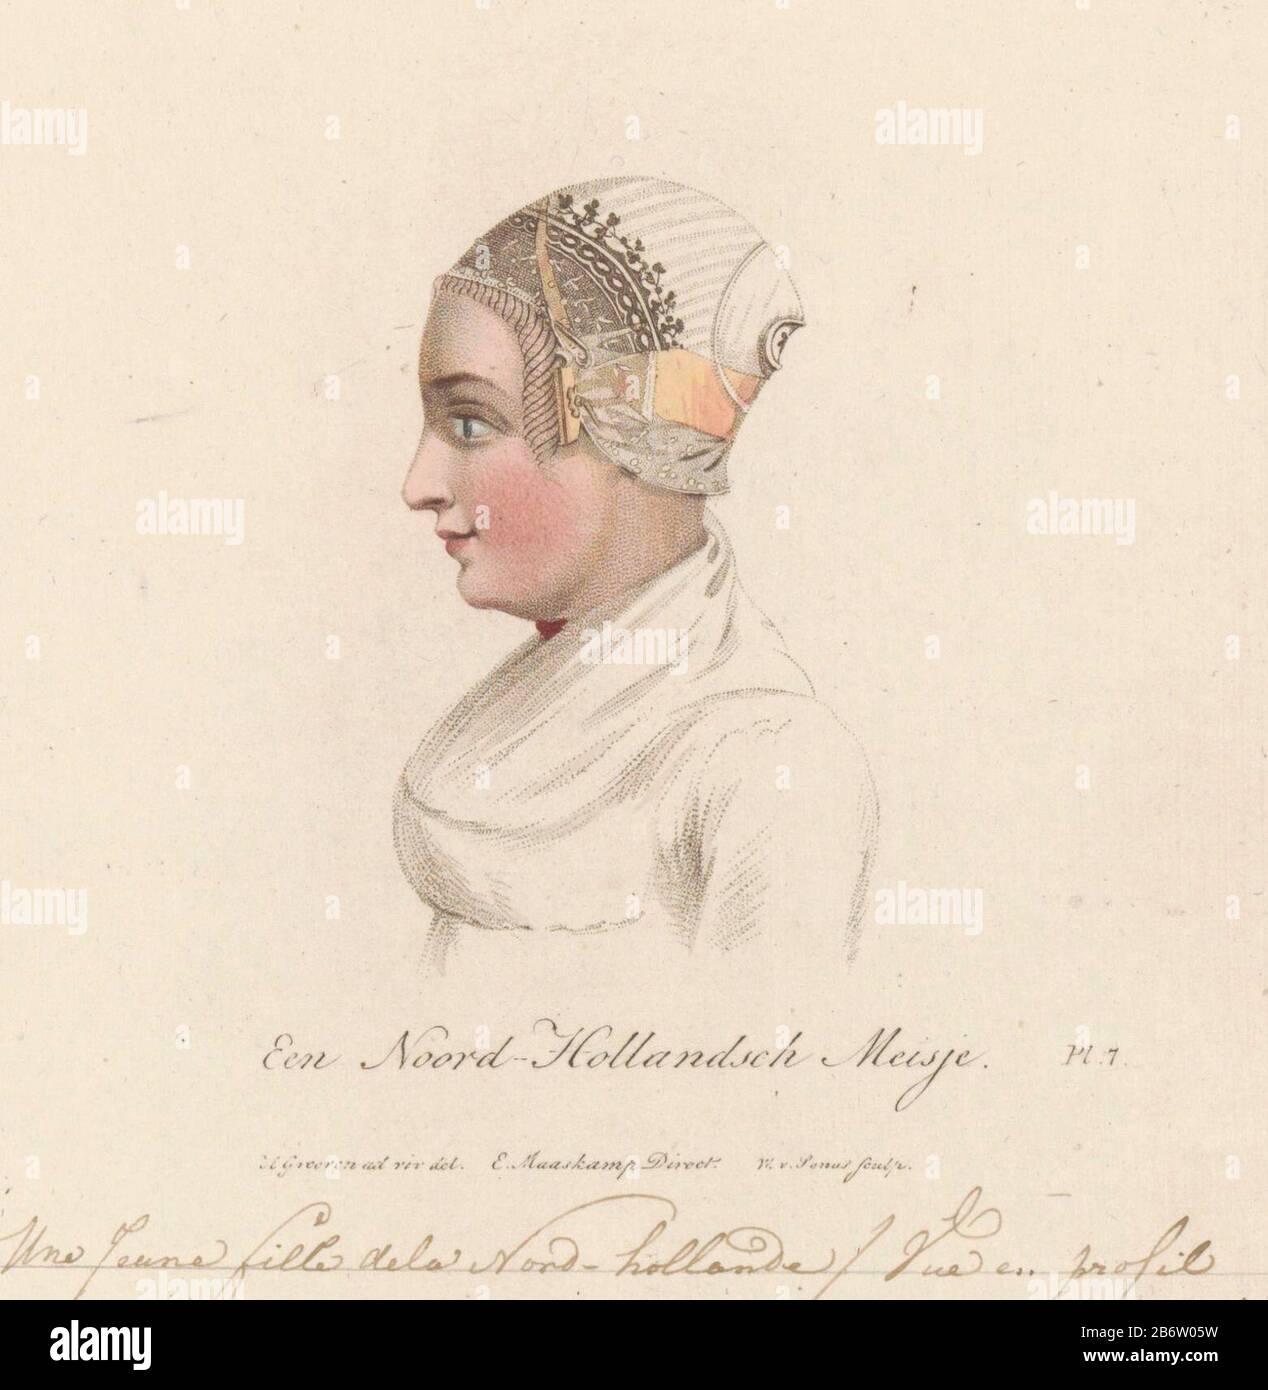 Hoofddracht van een meisje uit Noord-Holland, 1816 Een Noord-Hollandsch  Meisje Une Jeune fille de la Nord-hollande Vue en profil (titel op object)  Bust of a young woman from North Holland in costume ,